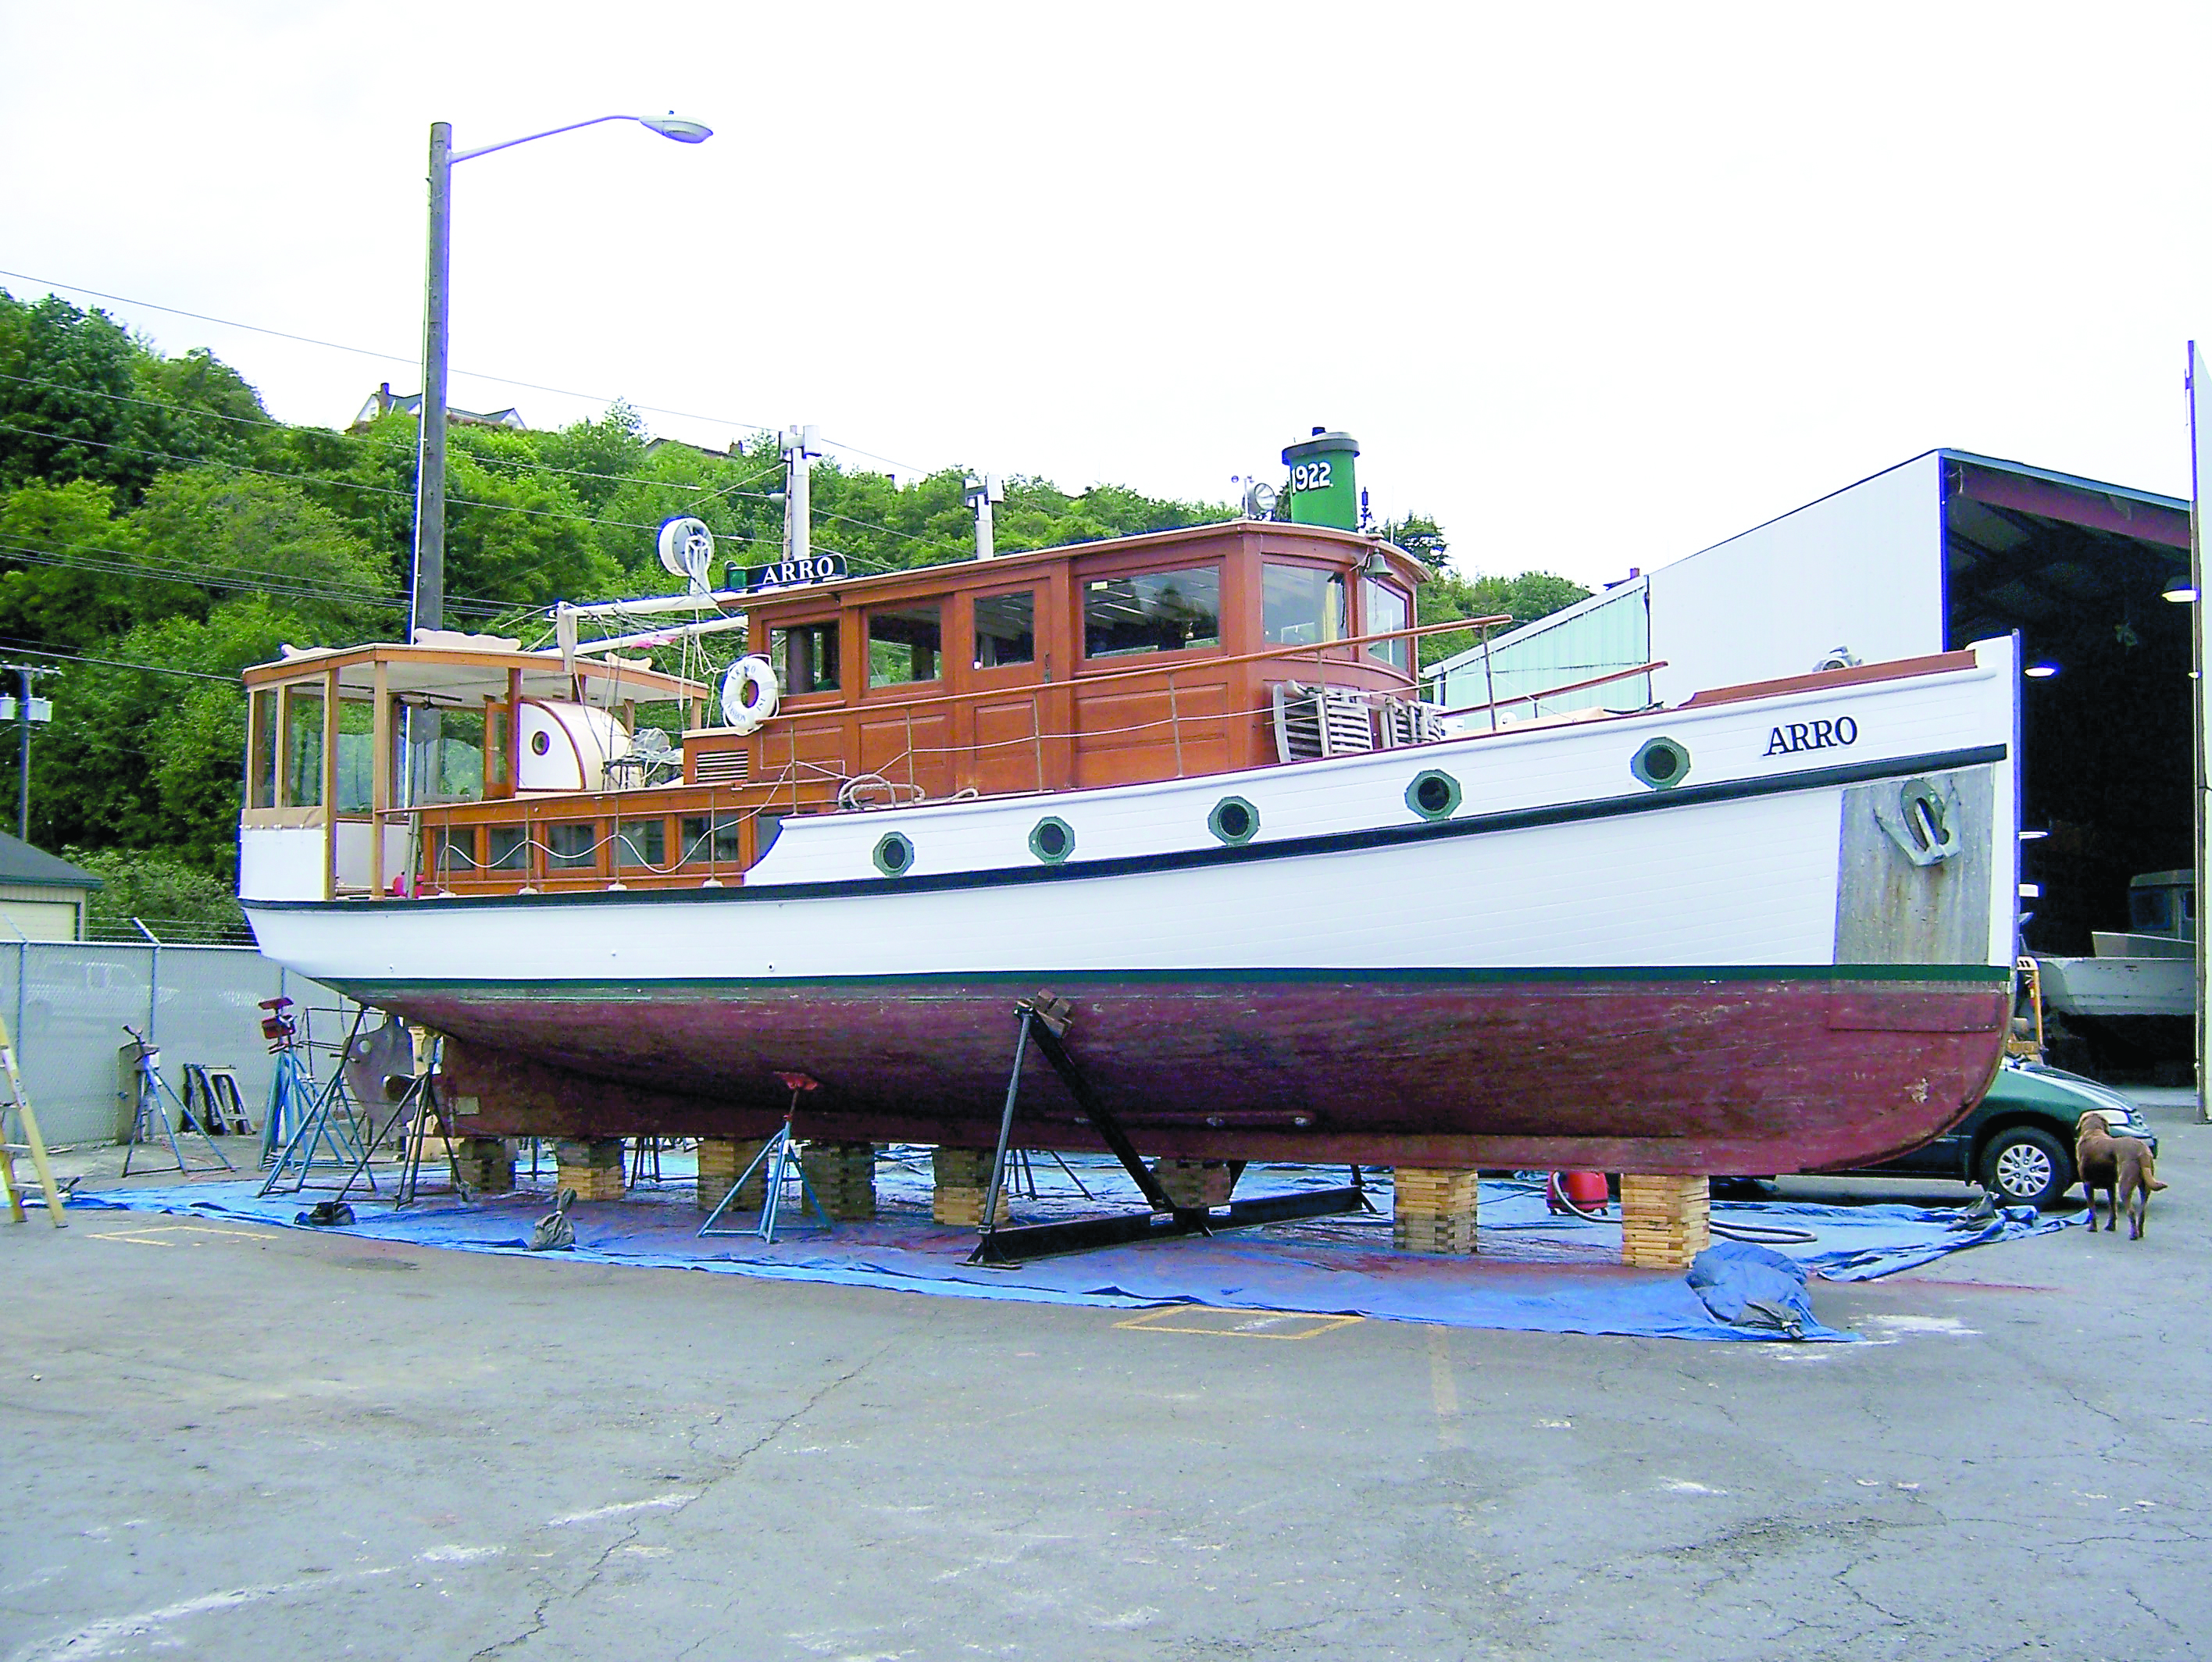 The 50-foot wooden yacht Arro